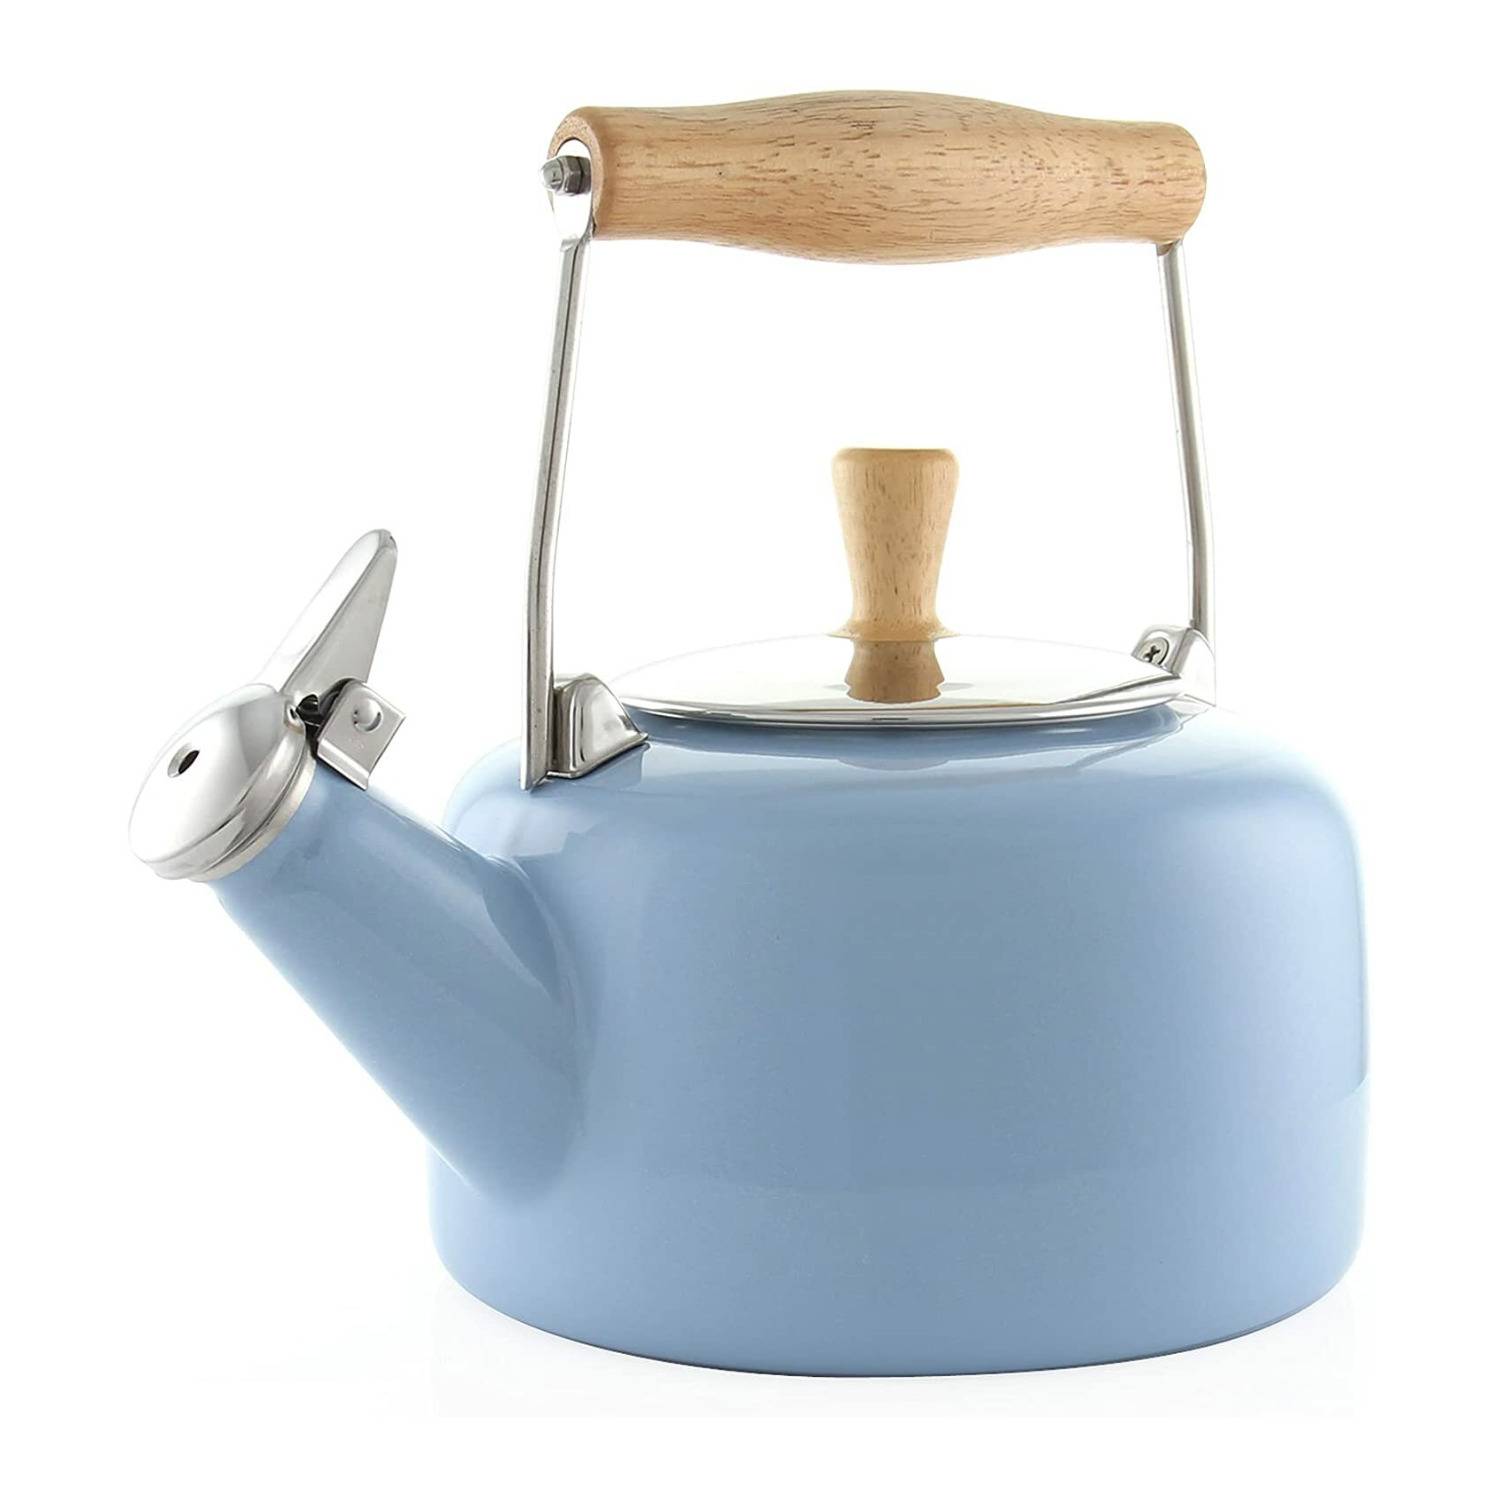 Chantal 1.4-Quart Enamel-on-Steel Sven Tea Kettle with Wood Handle (Glacier Blue)